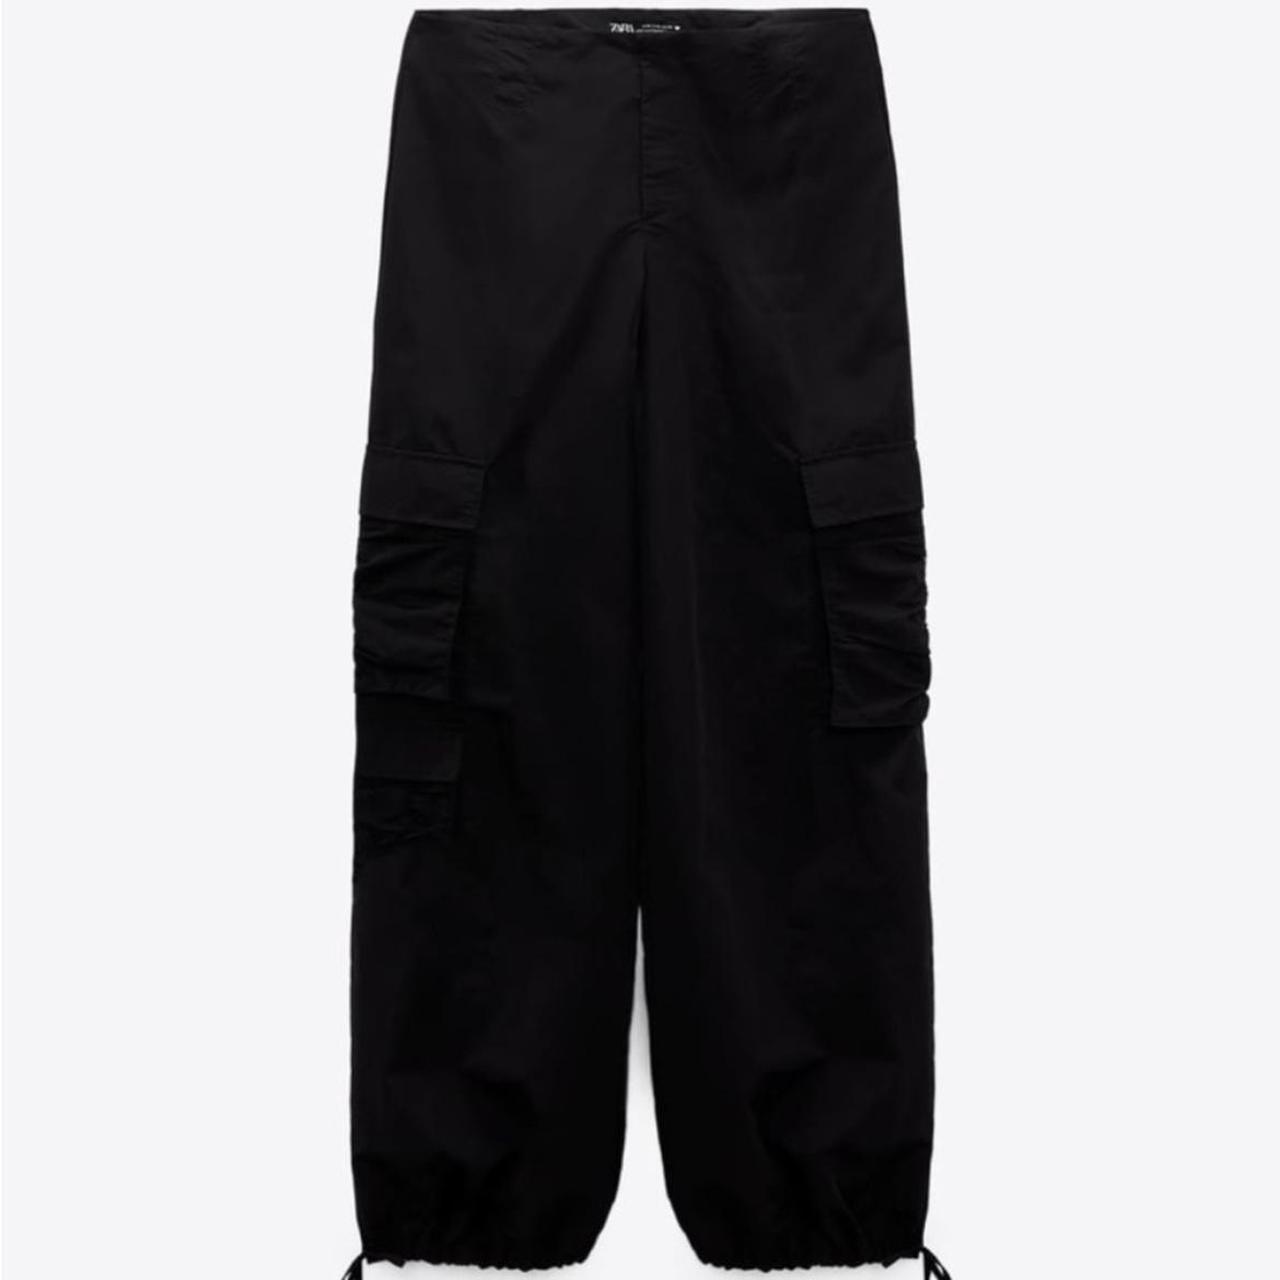 Zara Parachute Pants in Black Size XS - Depop